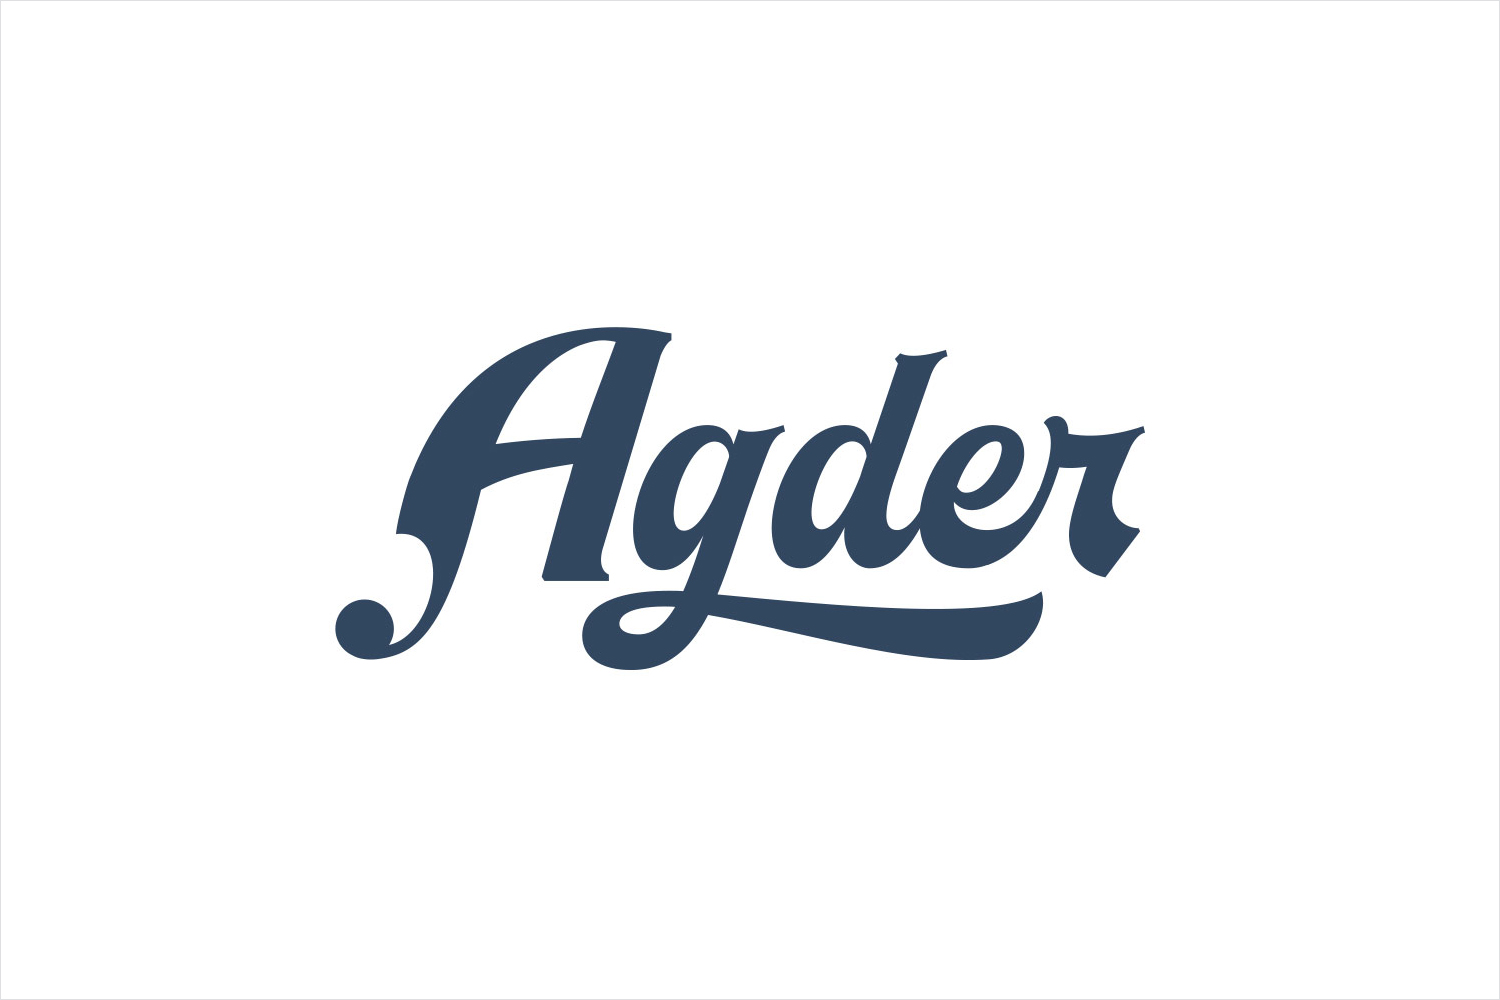 Creative Logotype Gallery & Inspiration: Agder Bryggeri by Frank, Norway